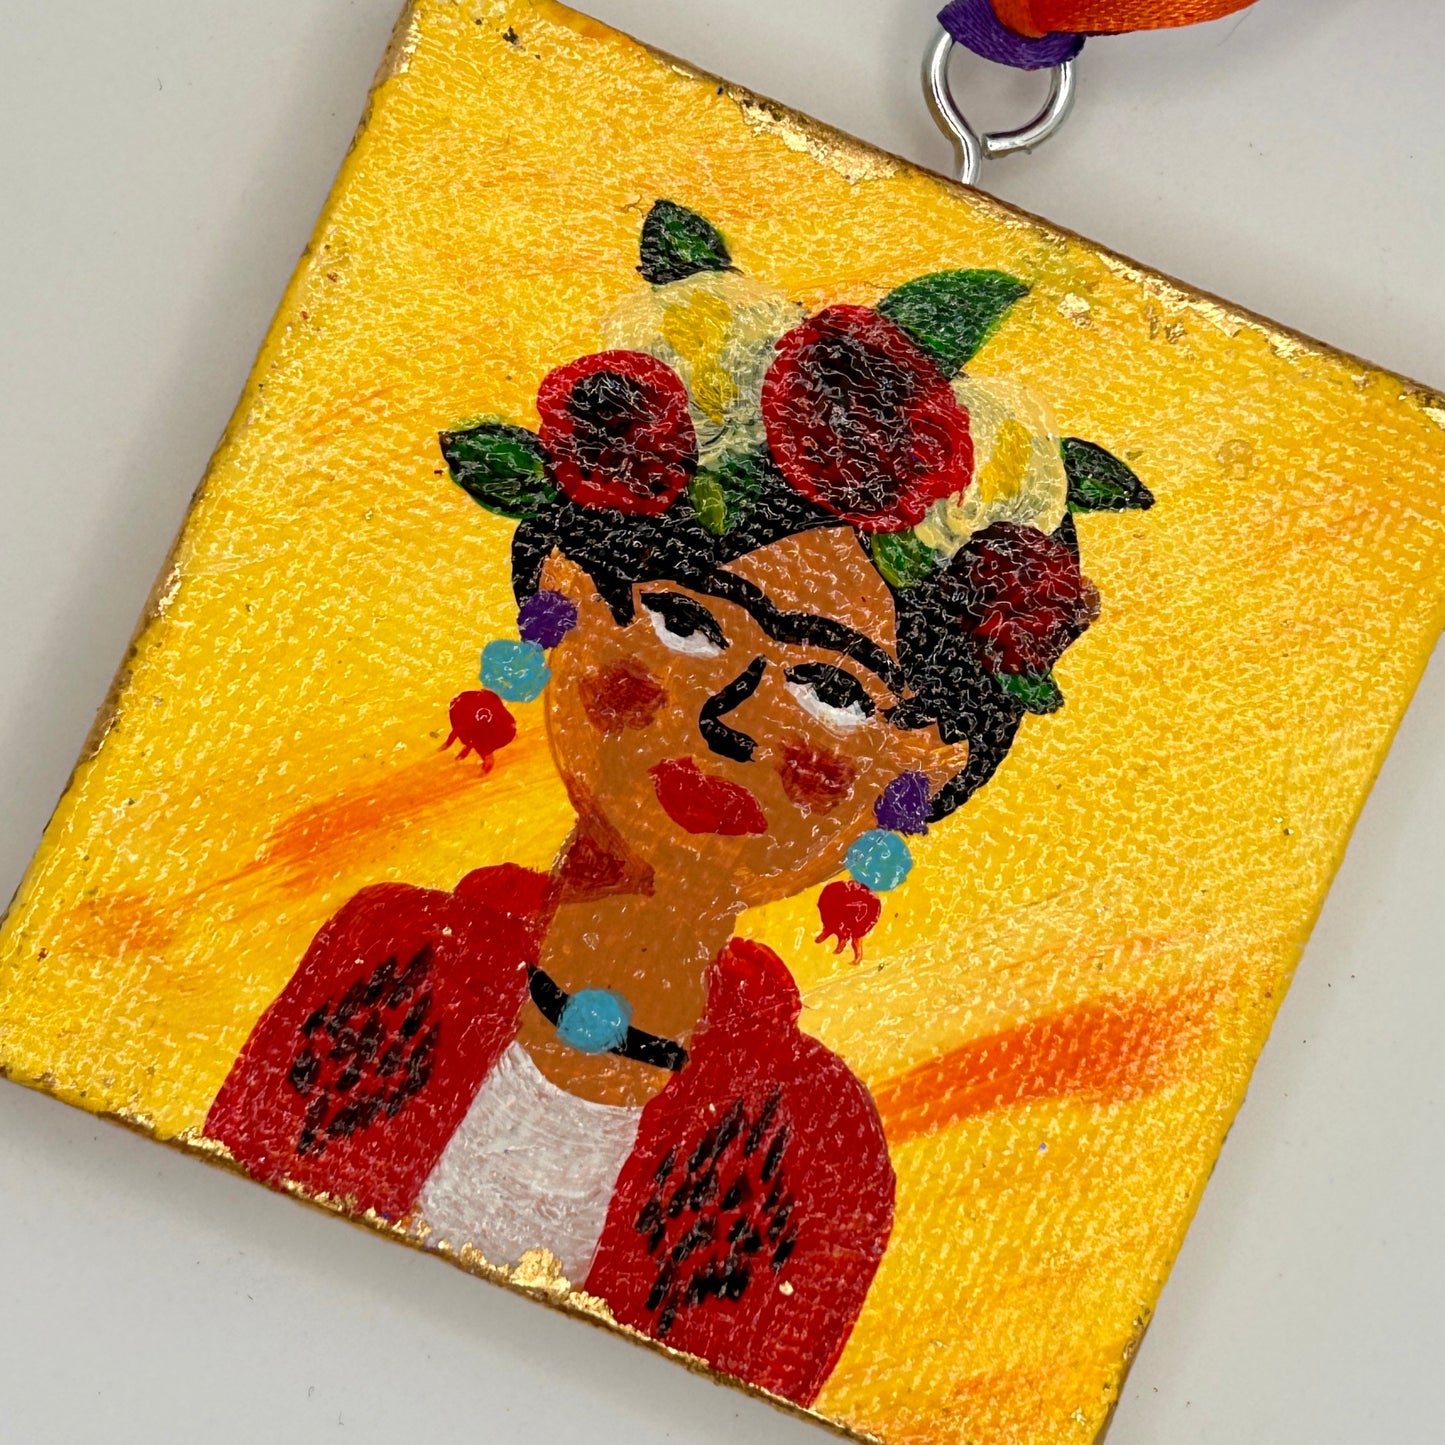 Frida Kahlo Yellow 2X2 inch canvas ornament